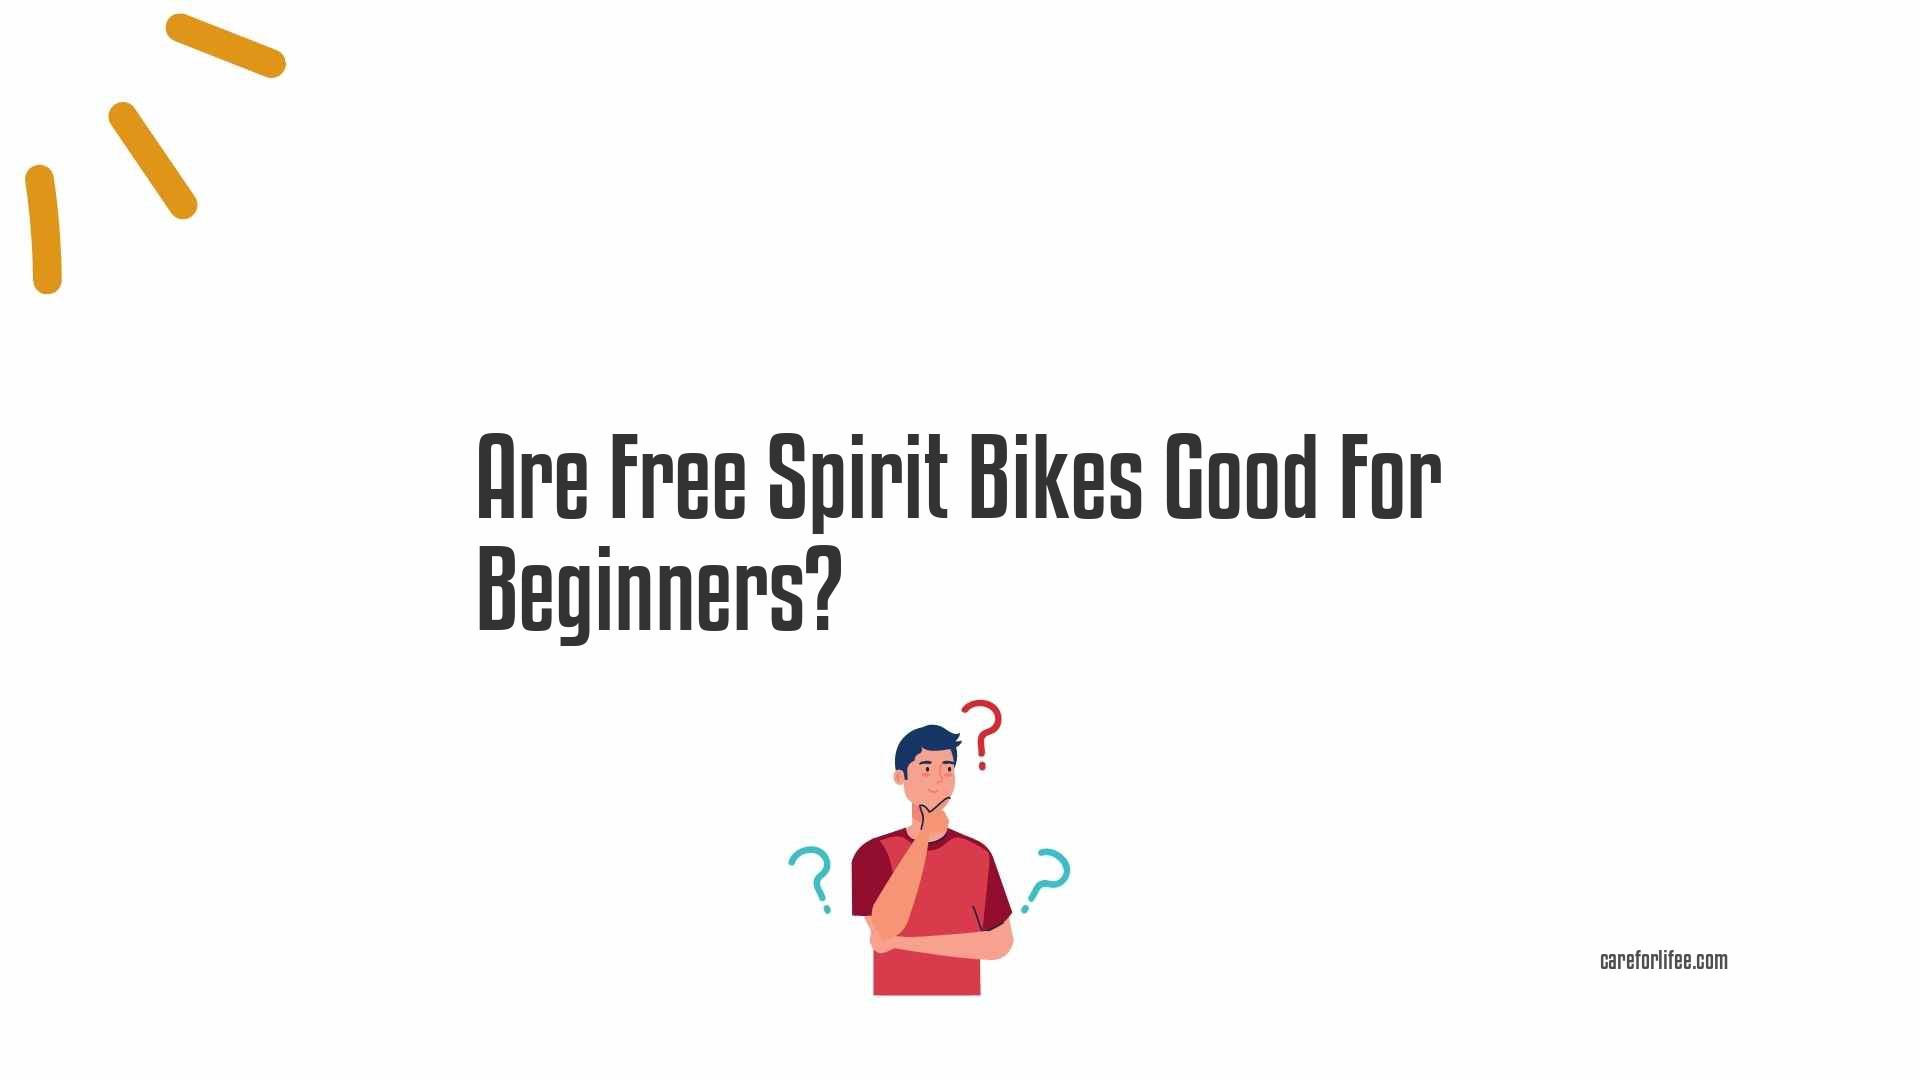 Are Free Spirit Bikes Good For Beginners?